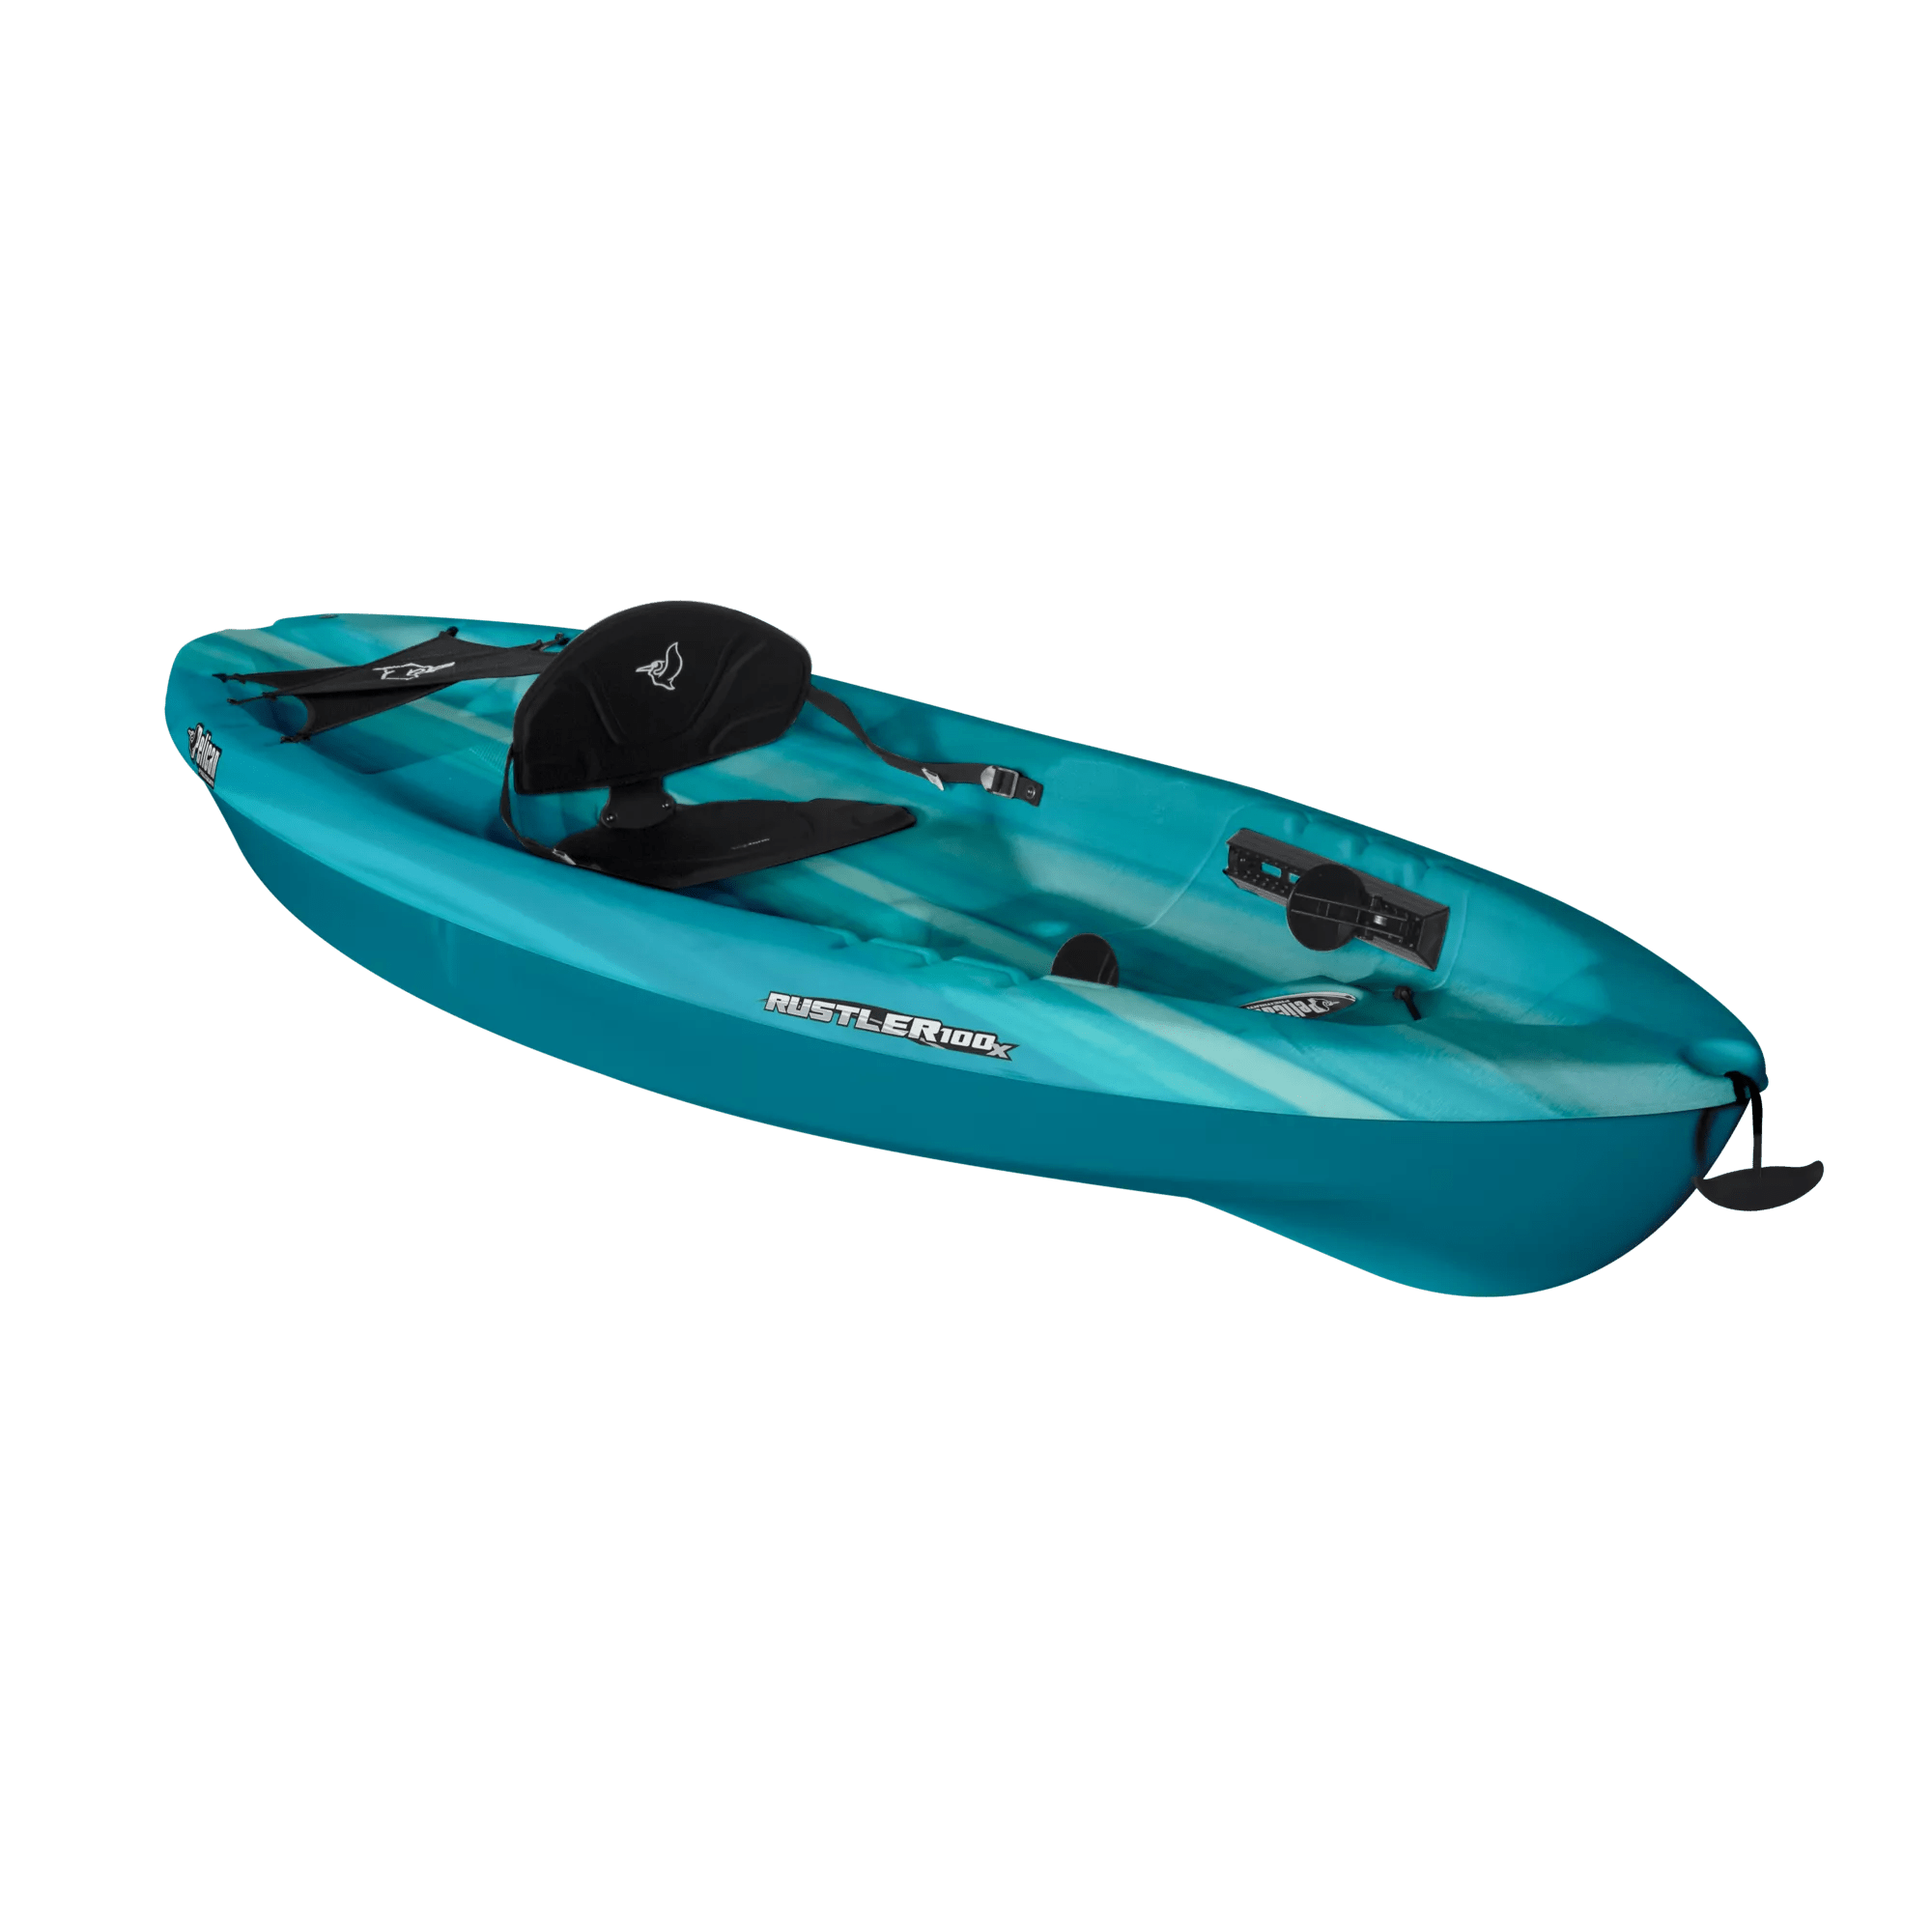 PELICAN - Rustler 100X Recreational Kayak - Blue - KVP10P100-00 - ISO 